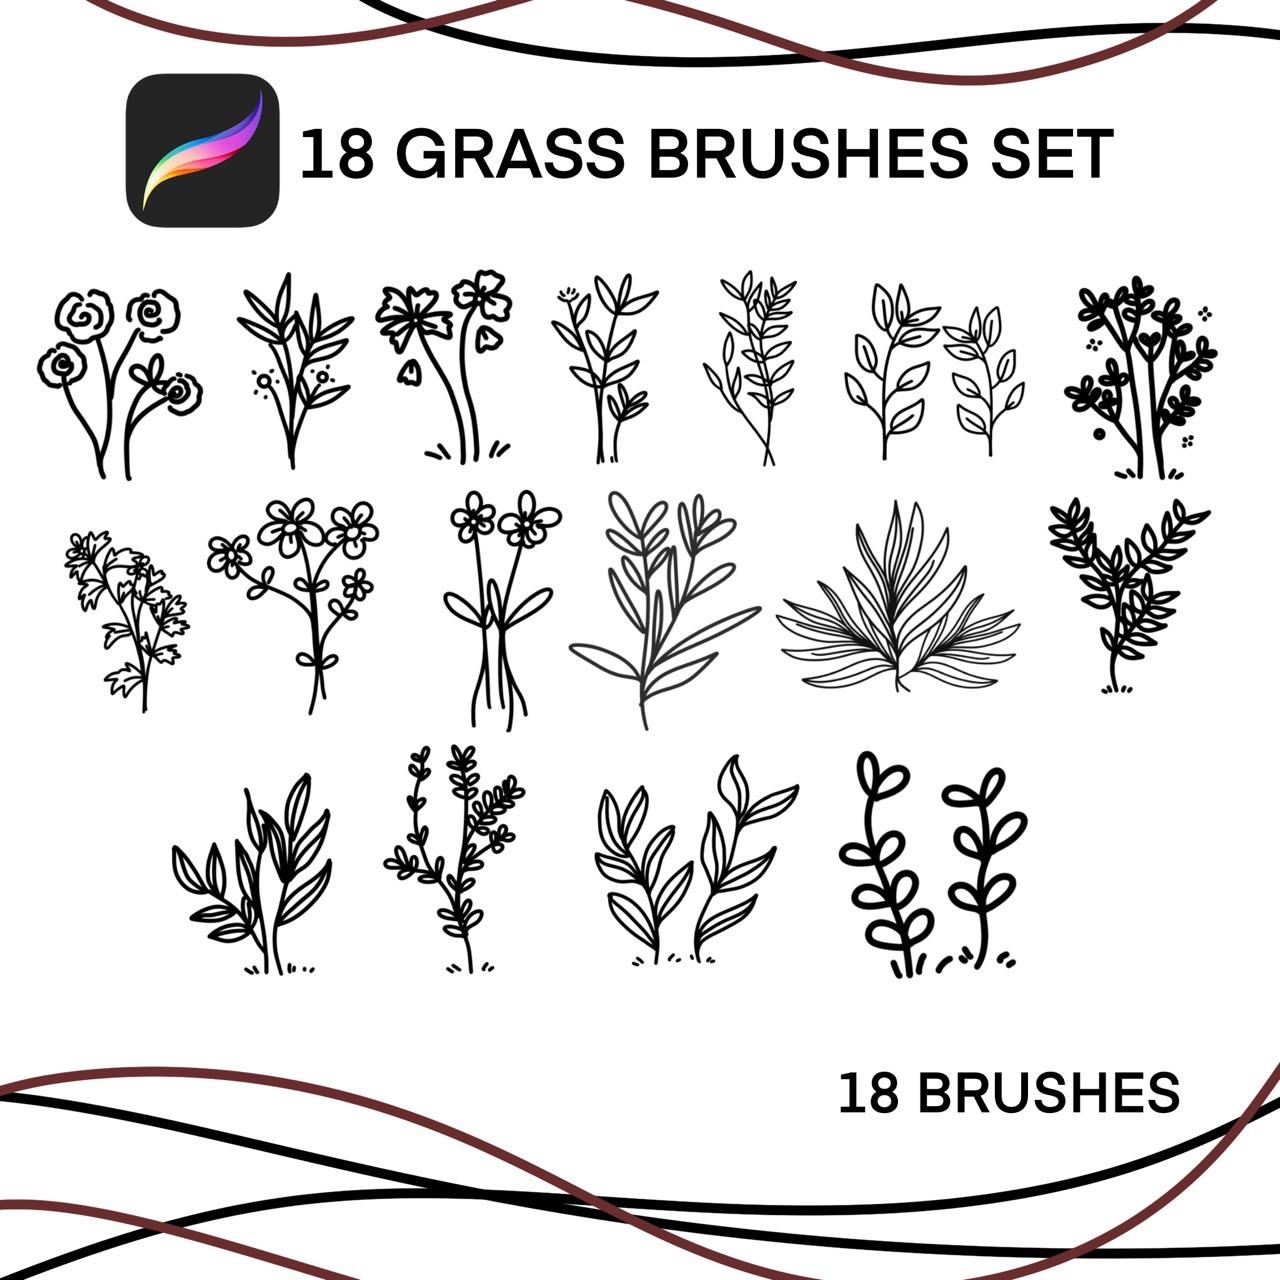 18 GRASS BRUSHES SET